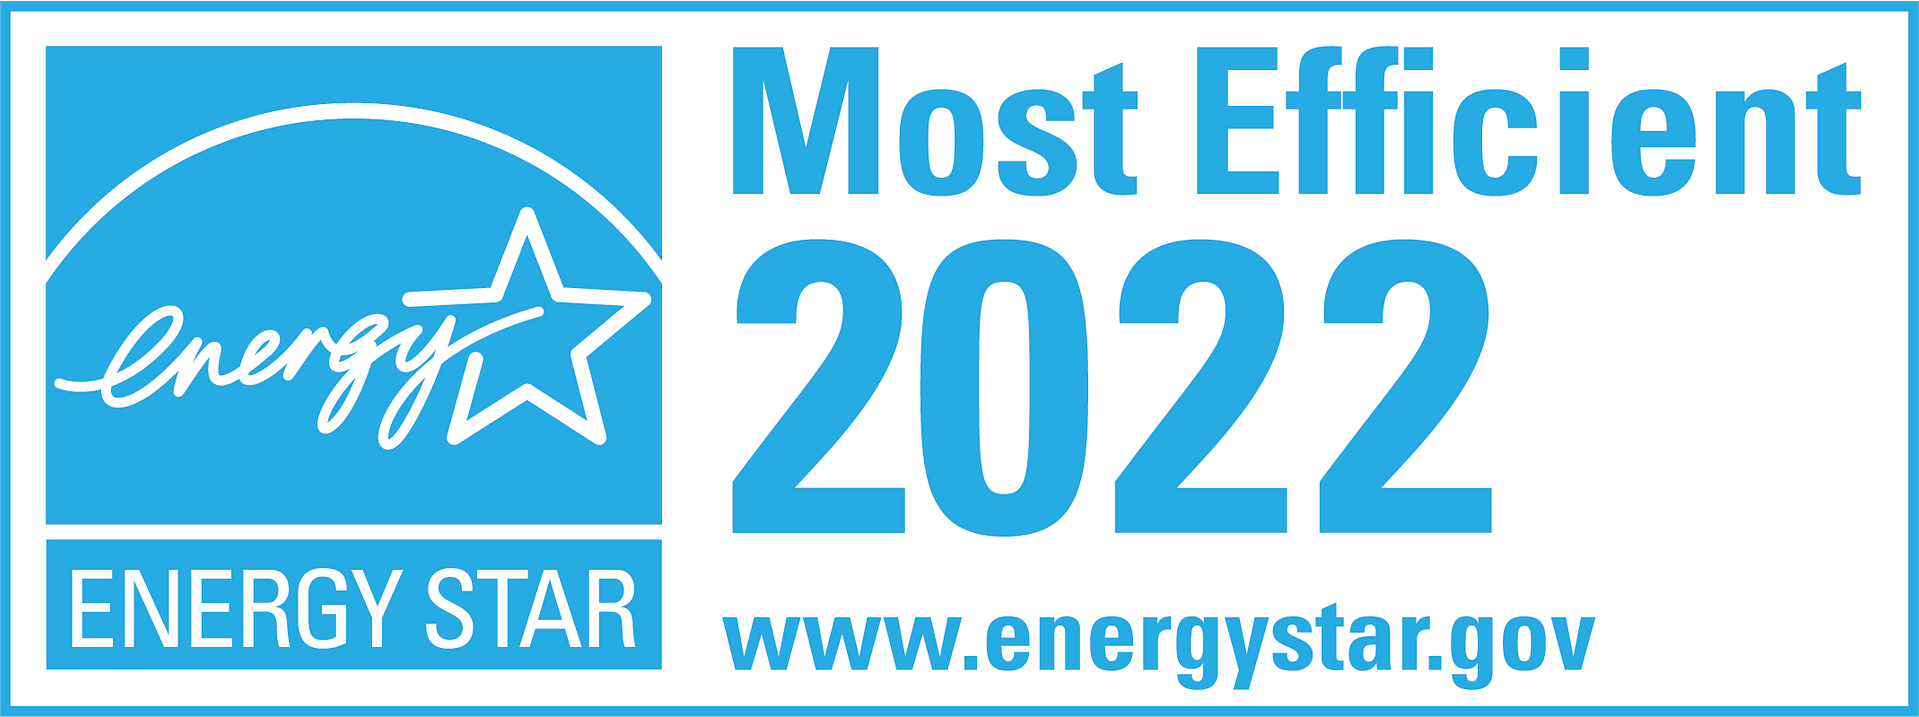 Most Efficient 2022